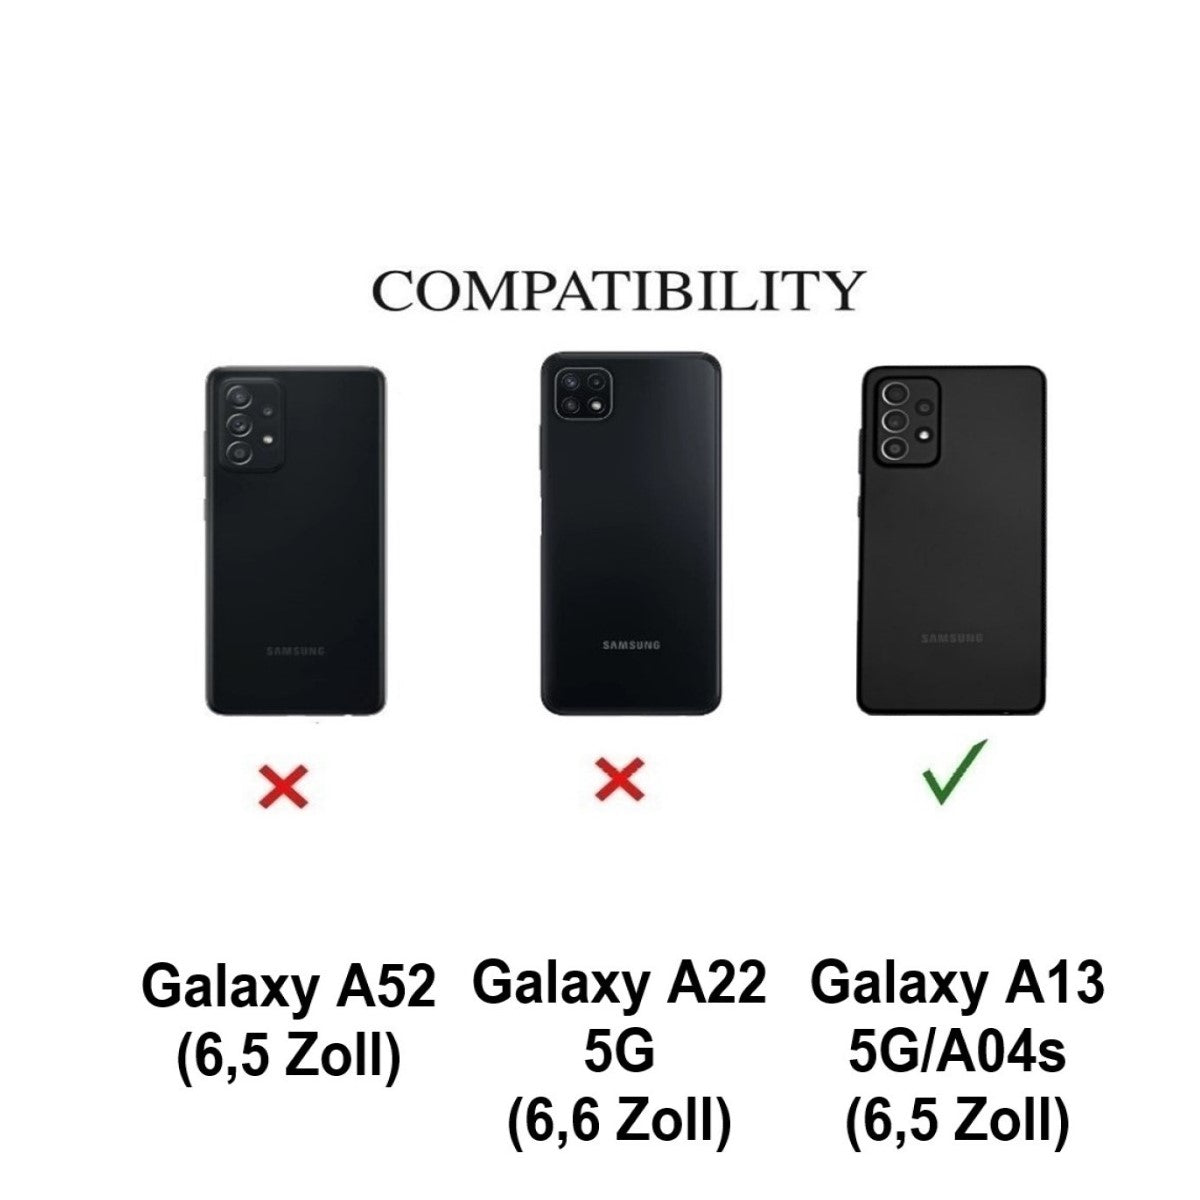 Hülle für Samsung Galaxy A13 5G/A04s Handyhülle Silikon Cover Bumper Matt Gelb